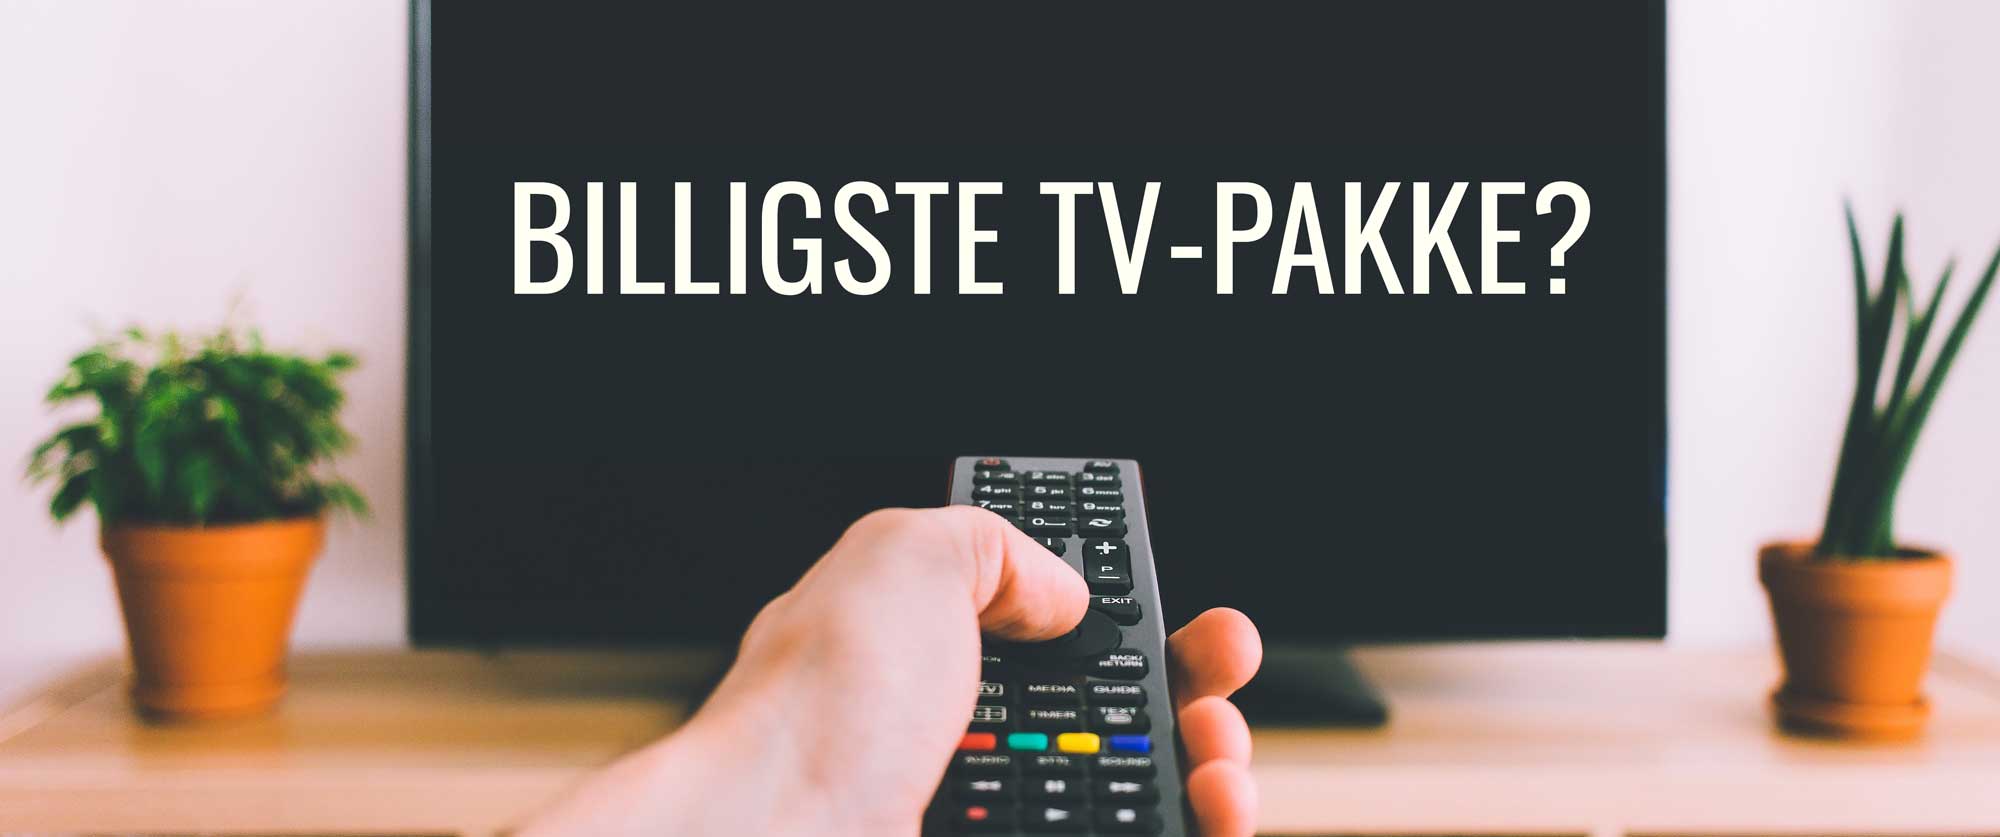 Sammenlign prisen på Danmarks billigste TV-pakker • MORE TV